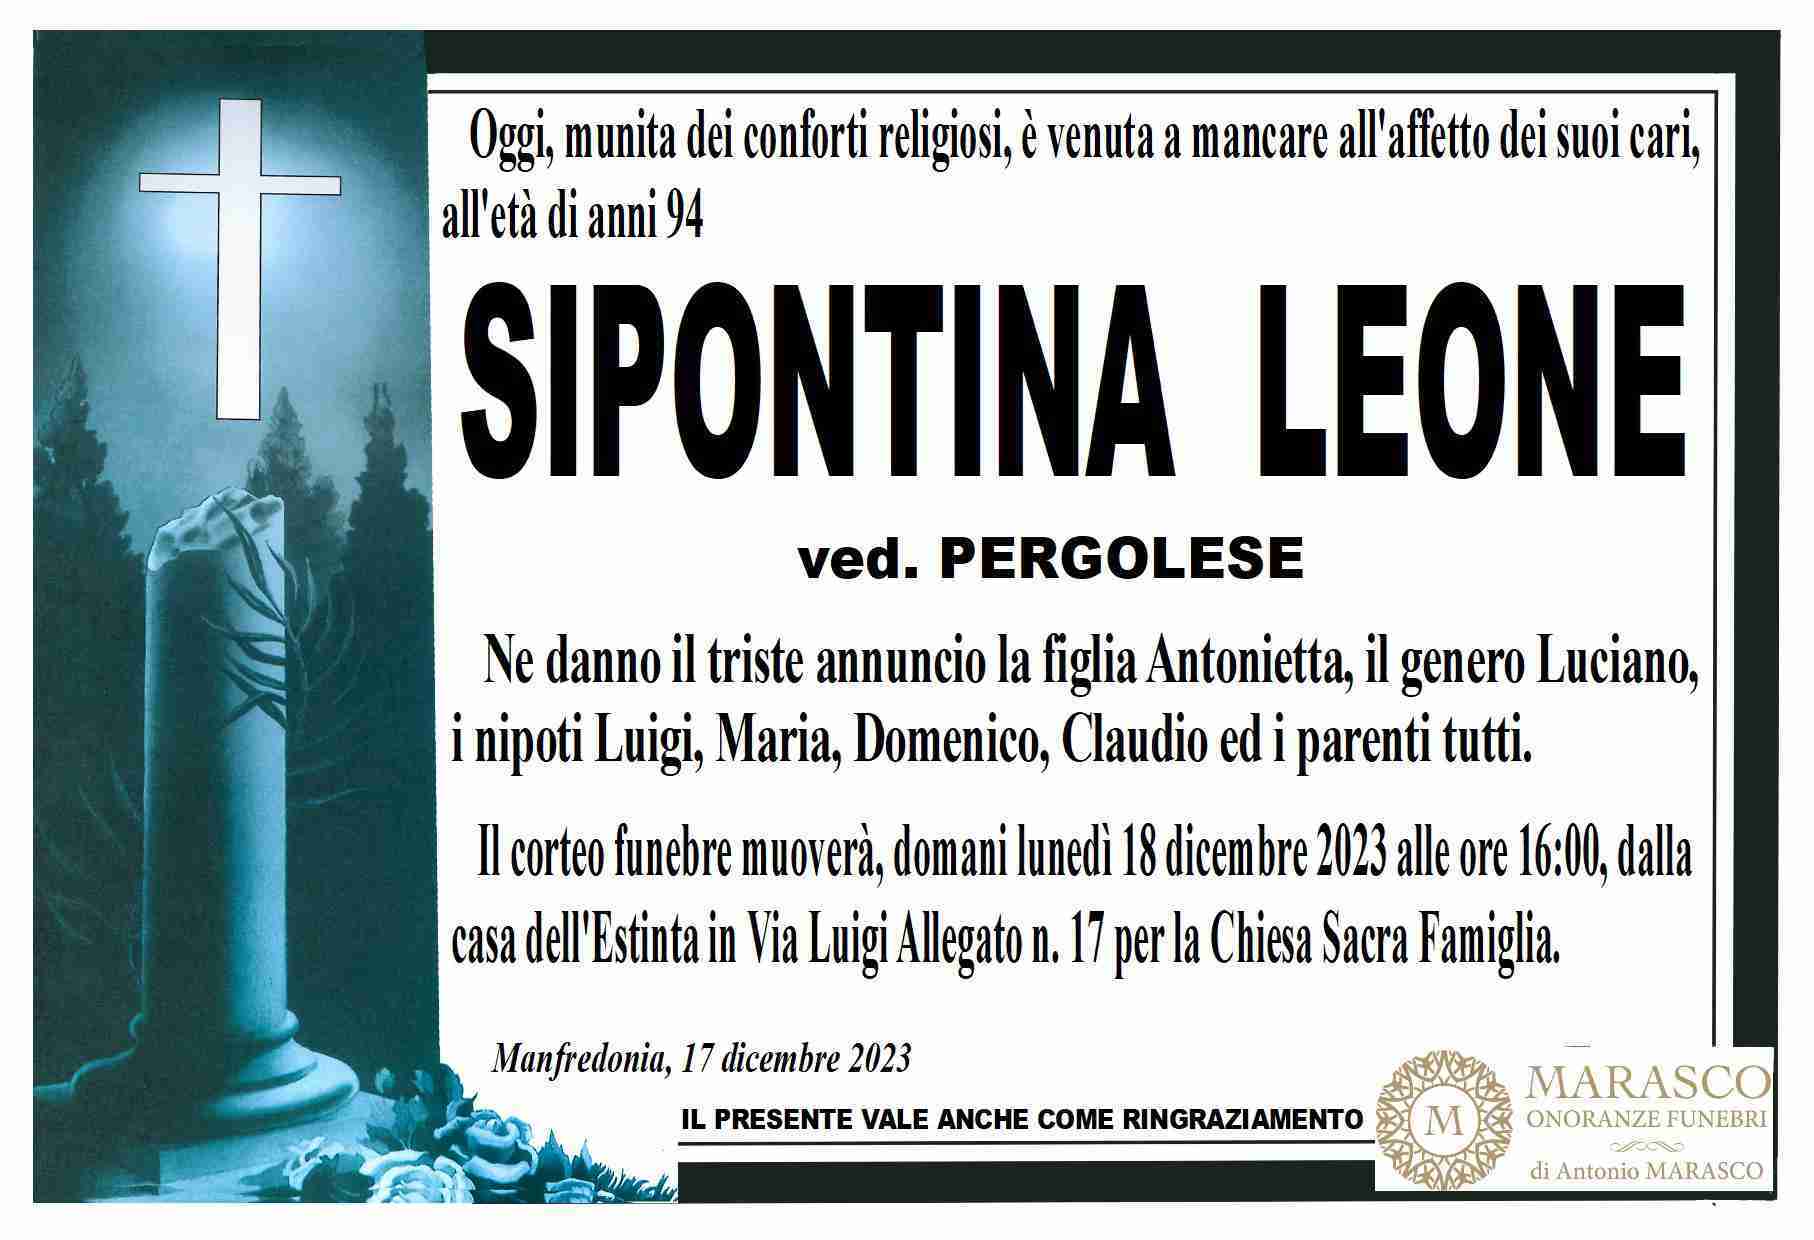 Sipontina Leone